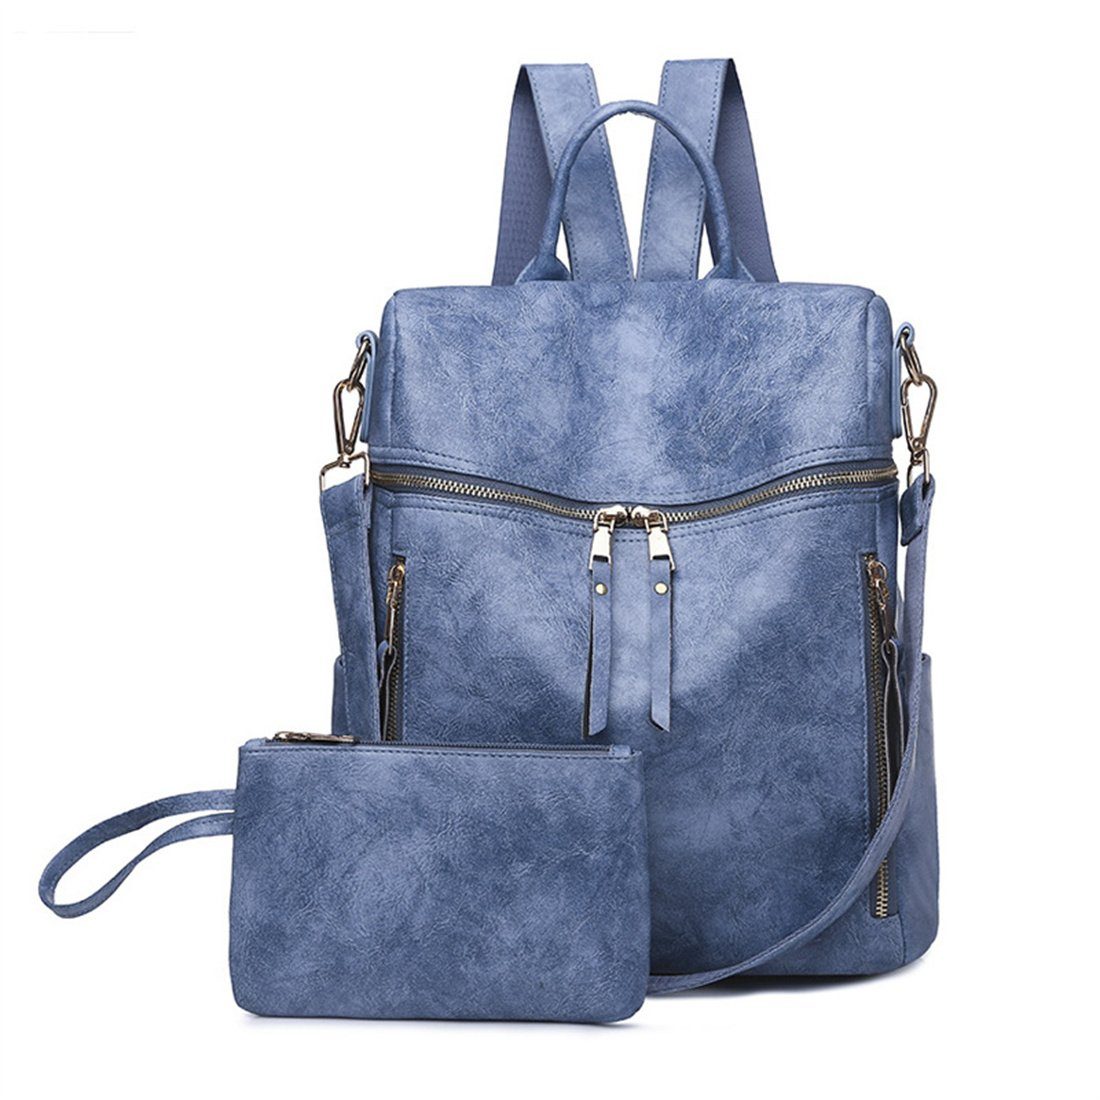 HNDSG Cityrucksack Damen große Kapazität Umhängetasche, Reise-Mode Doppel-Rucksack blau